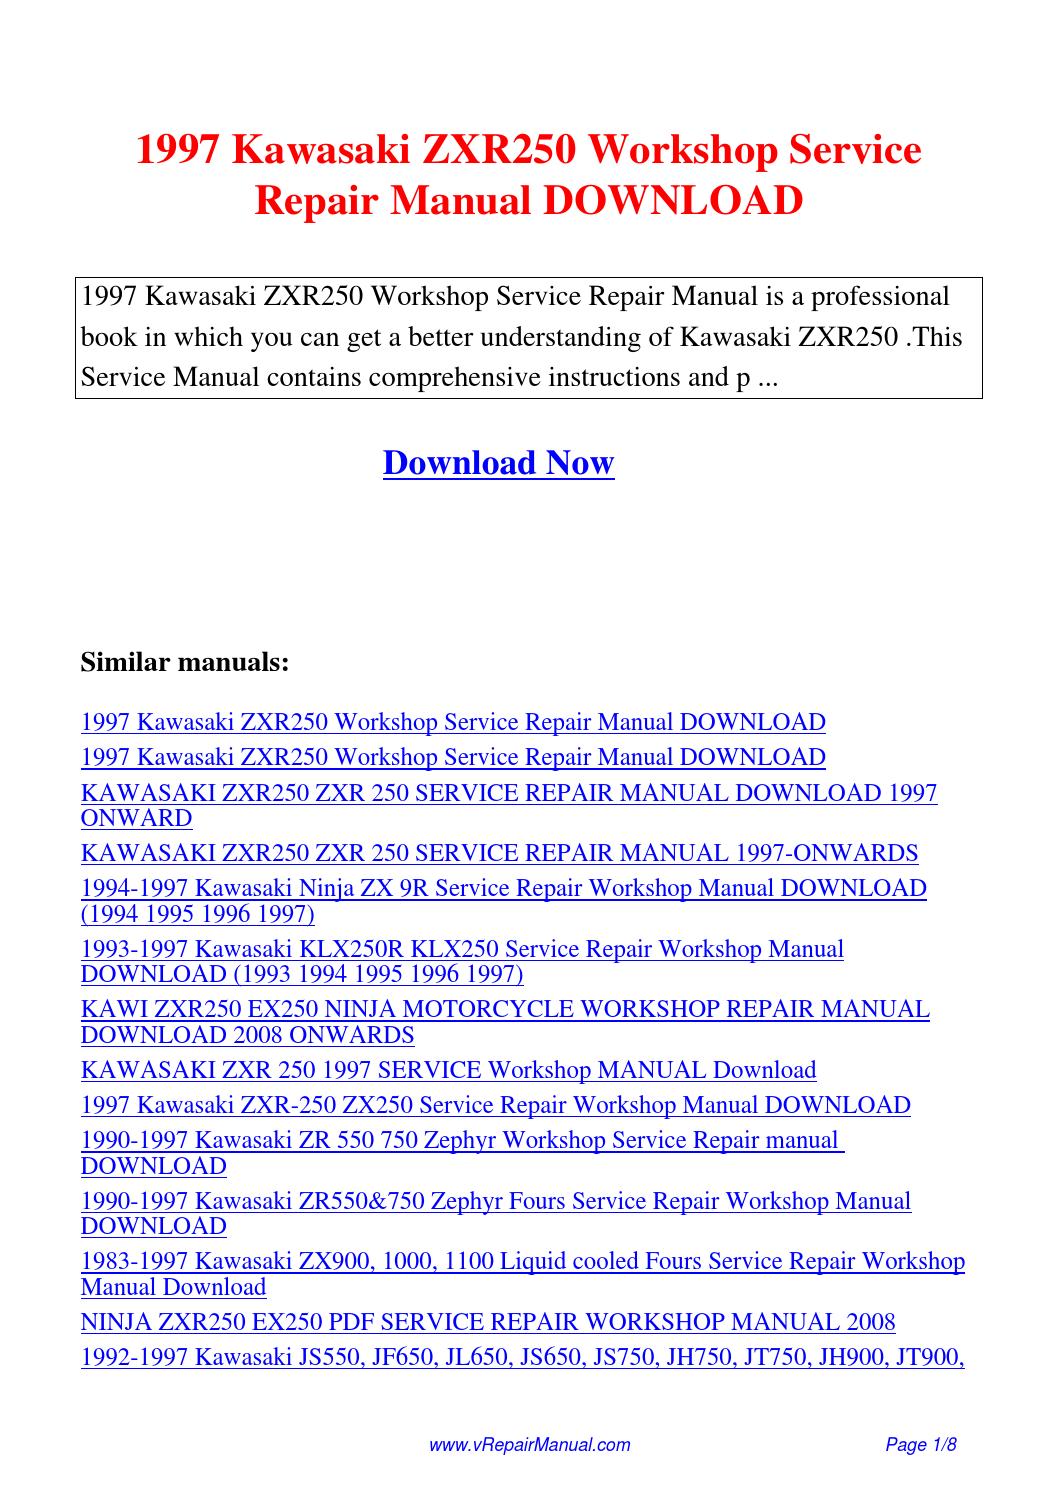 kawasaki z300 workshop manual pdf